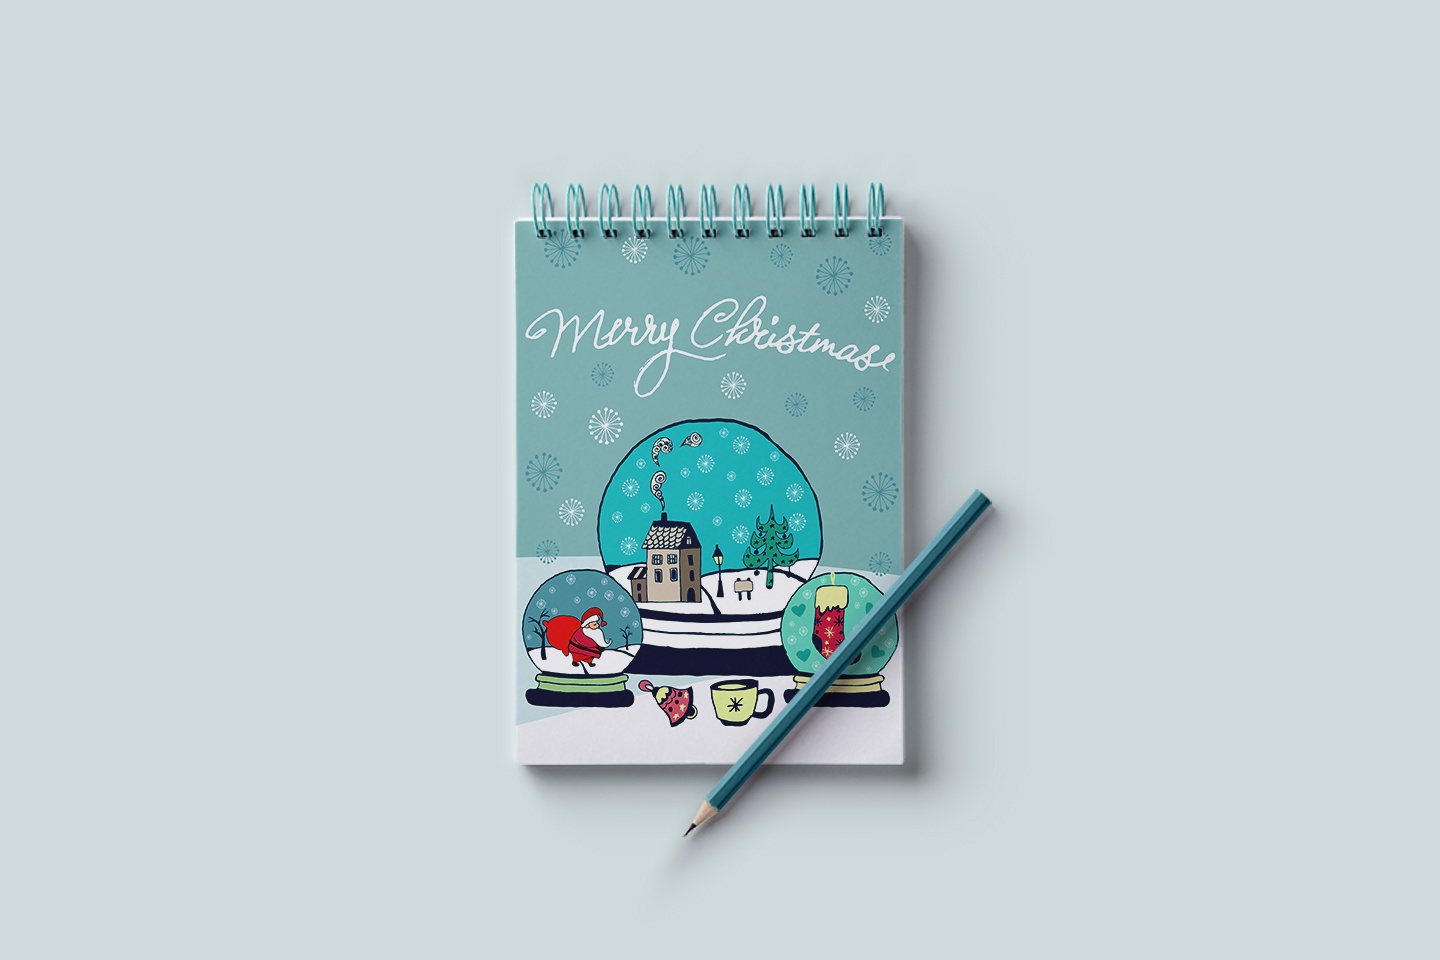 Merry Christmas Vector Free Illustration - GraphicSurf.com